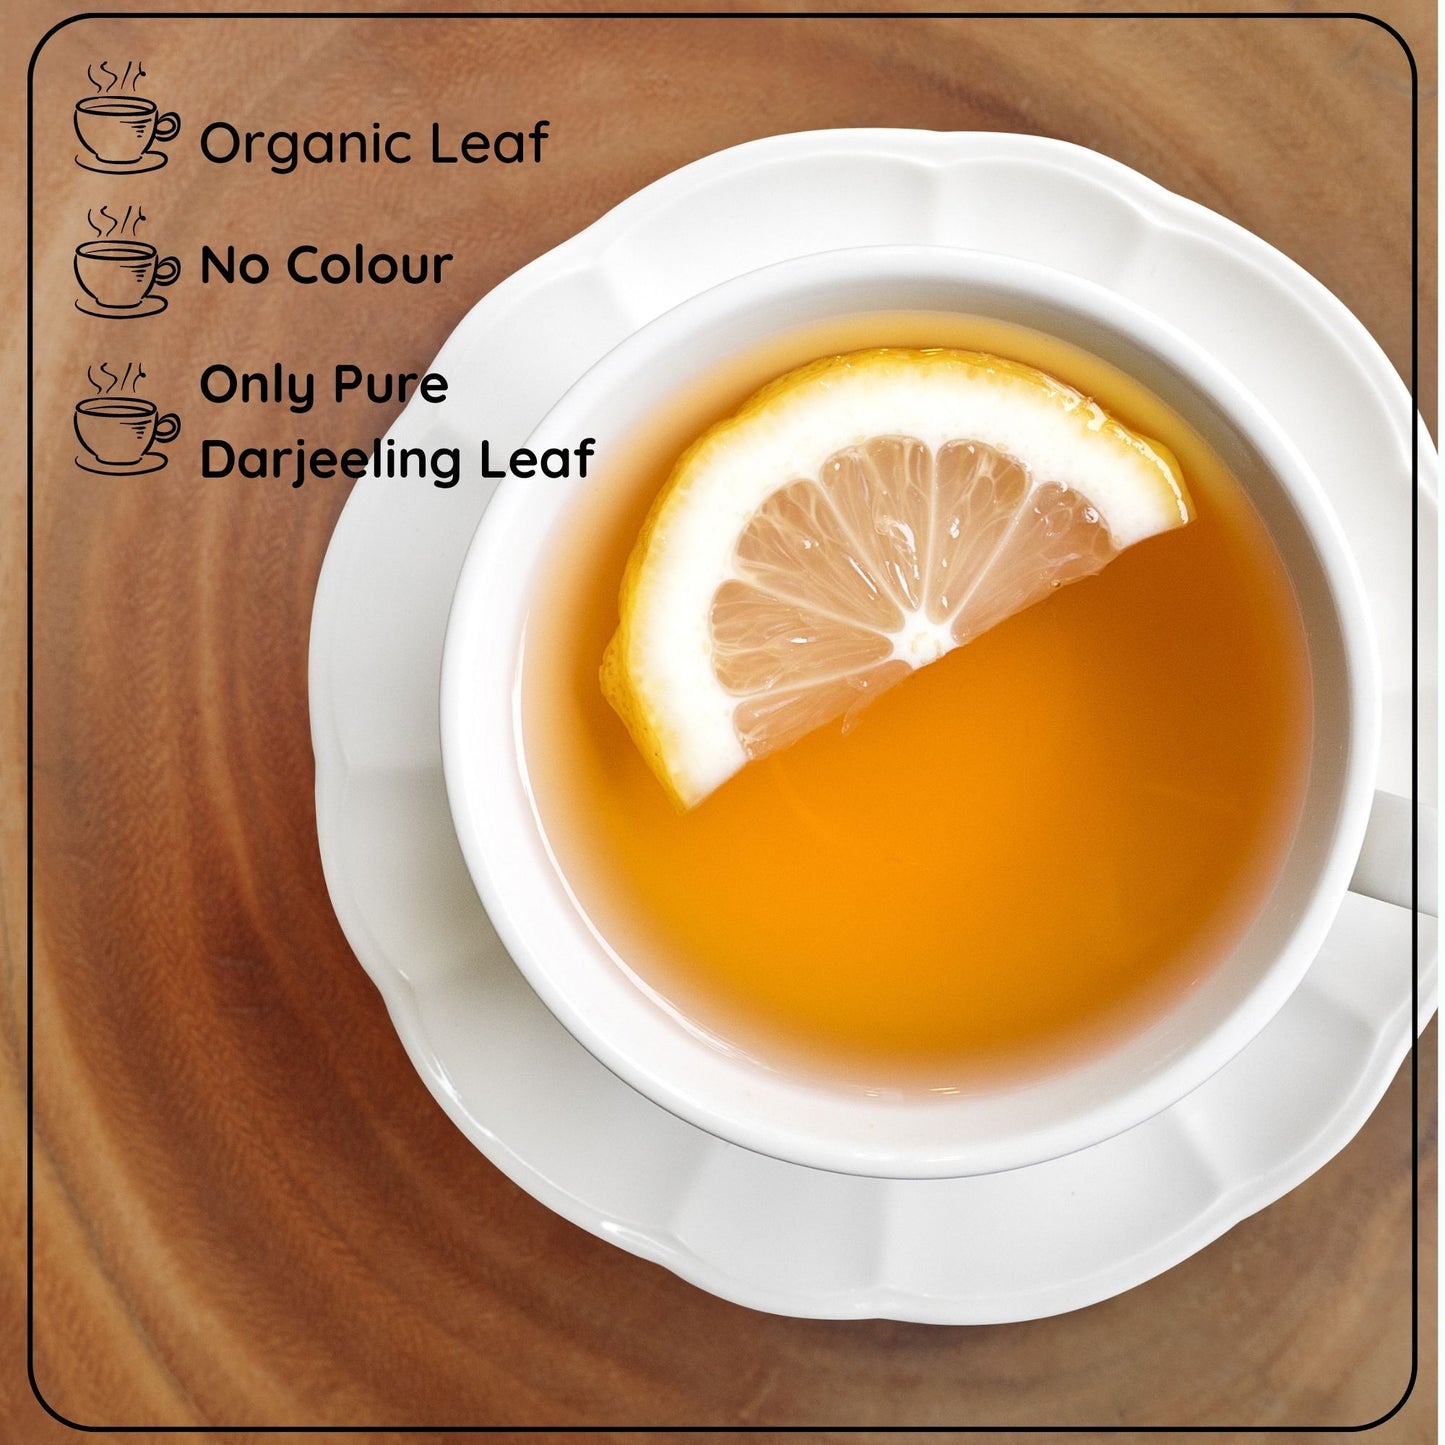 PURIFYING Earl Grey Tea - The Benefits of Drinking Purifying Earl Grey Tea for Digestion and Anxiety Relief - Radhikas Fine Teas and Whatnots